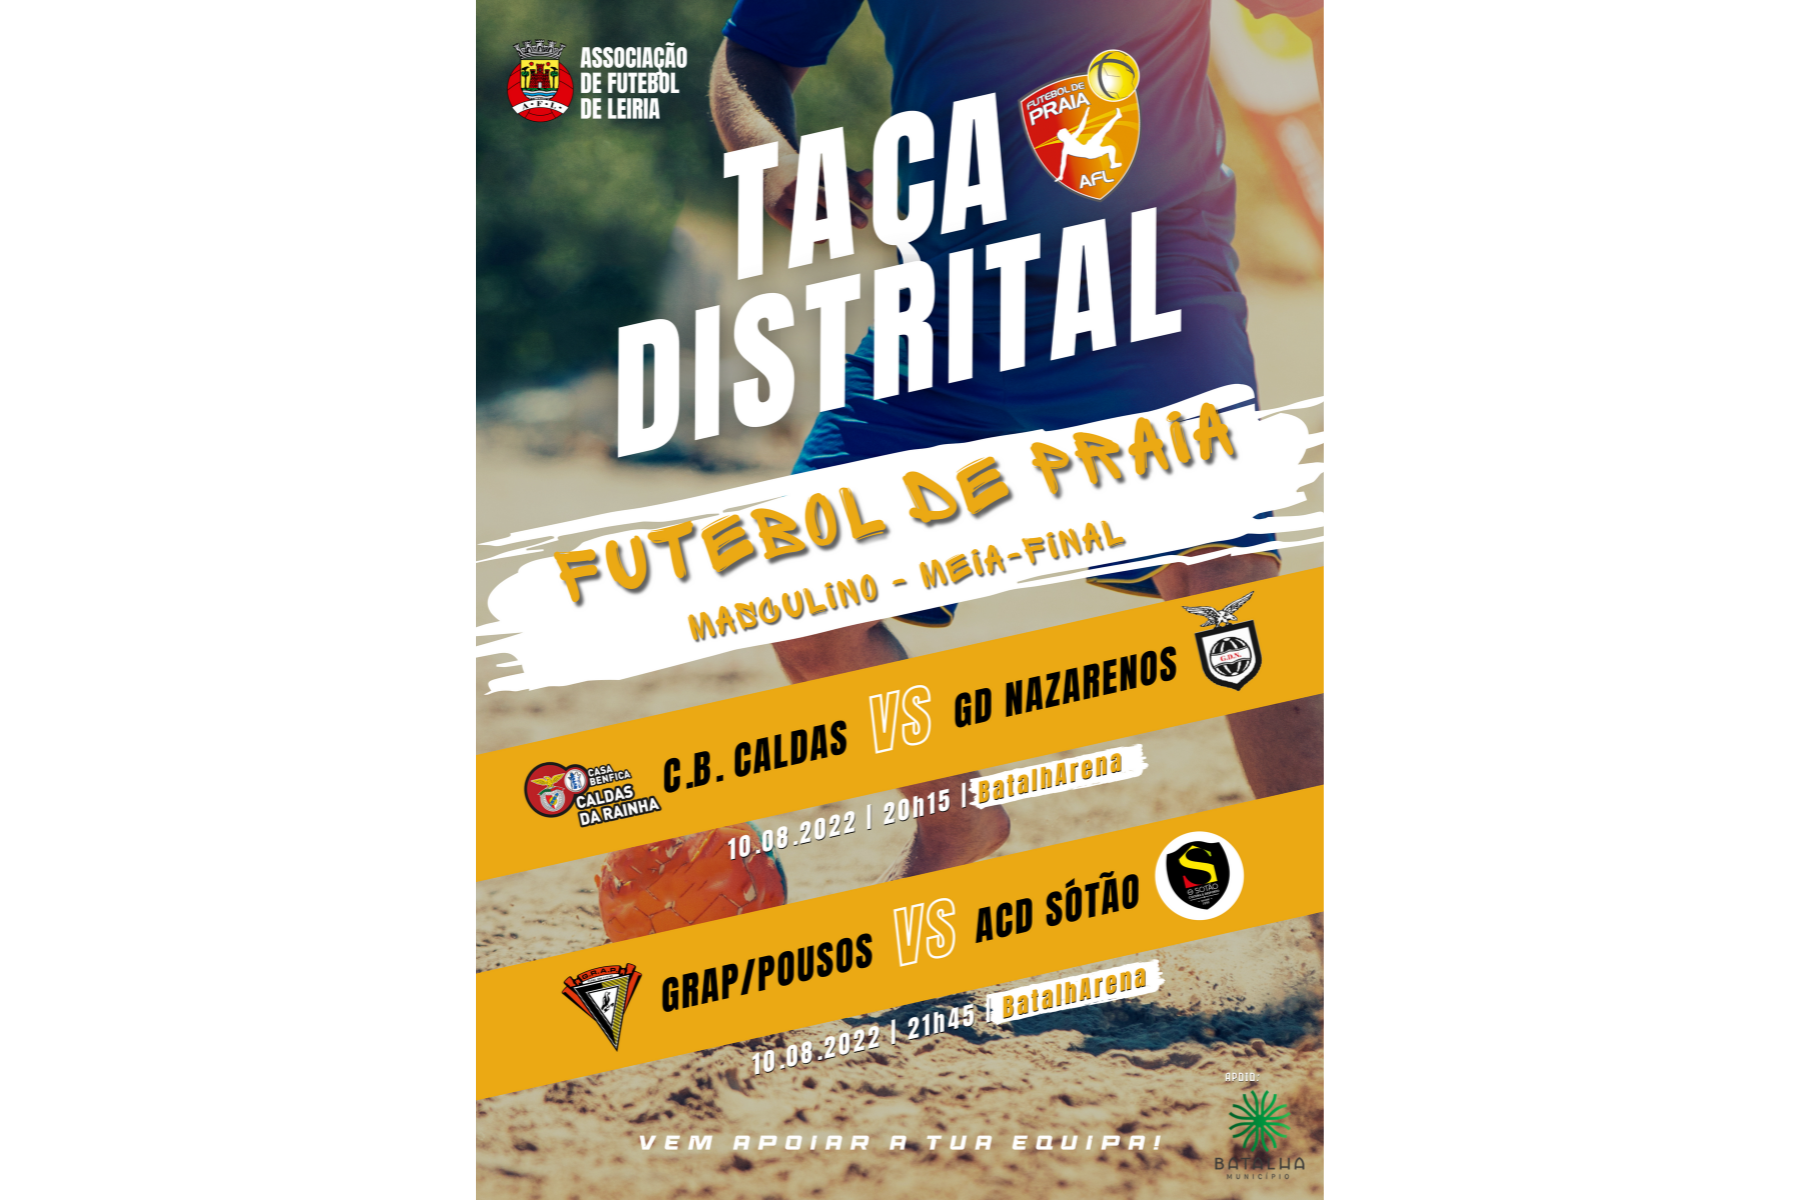 Meia-Final da Taça Distrital de Futebol de Praia joga-se amanhã